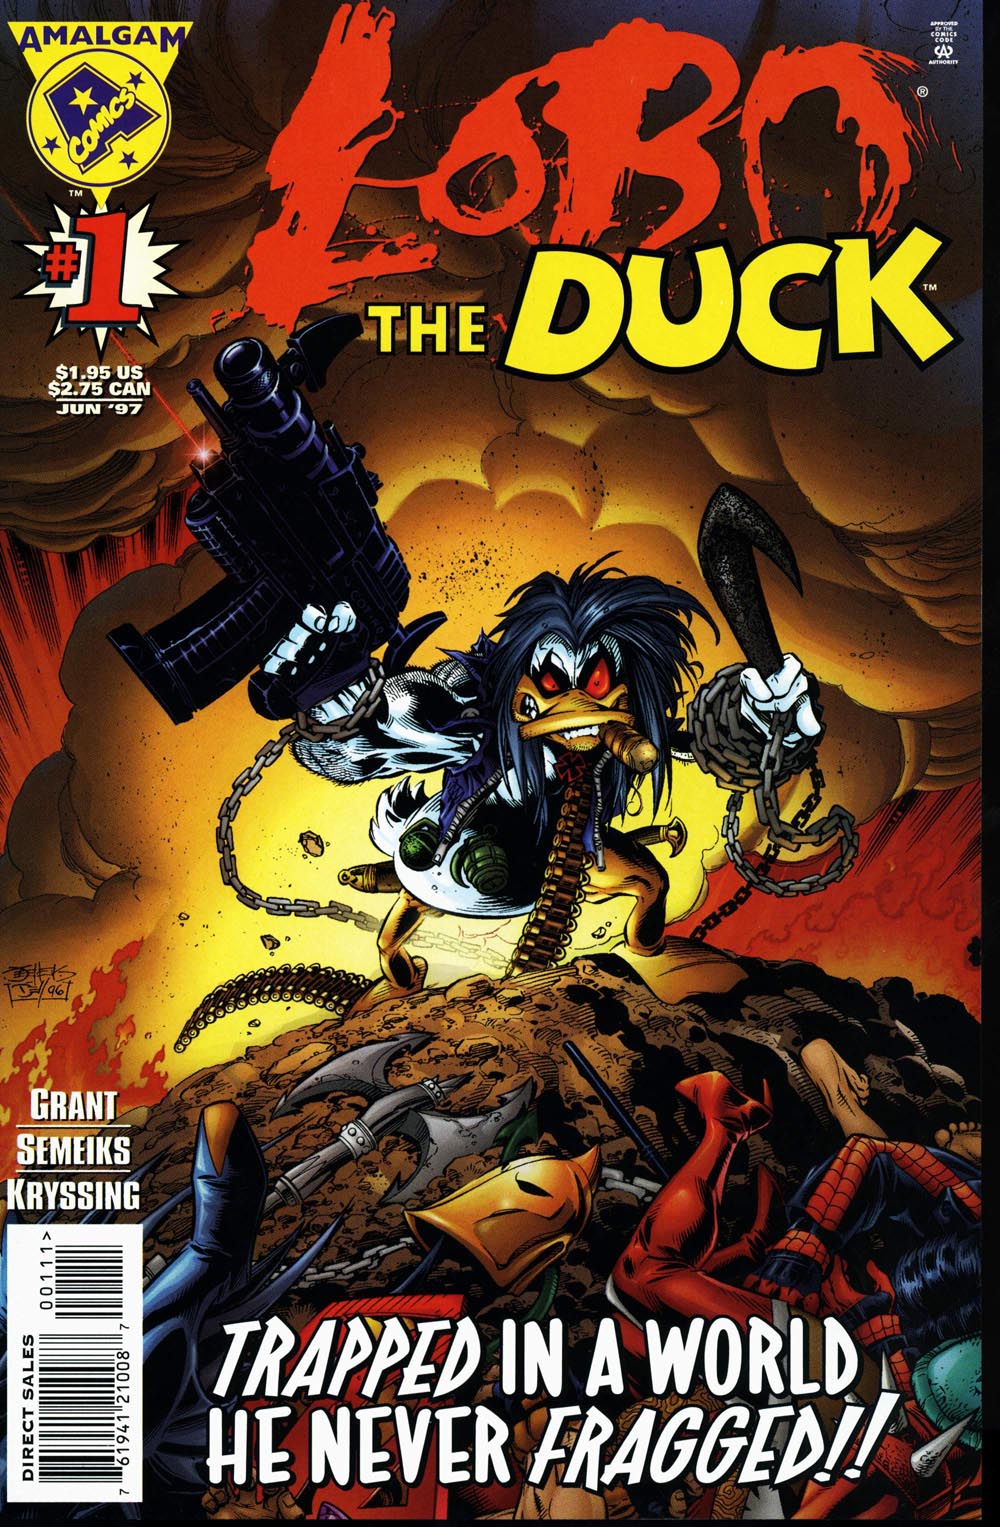 Read online Lobo the Duck comic -  Issue # Full - 1